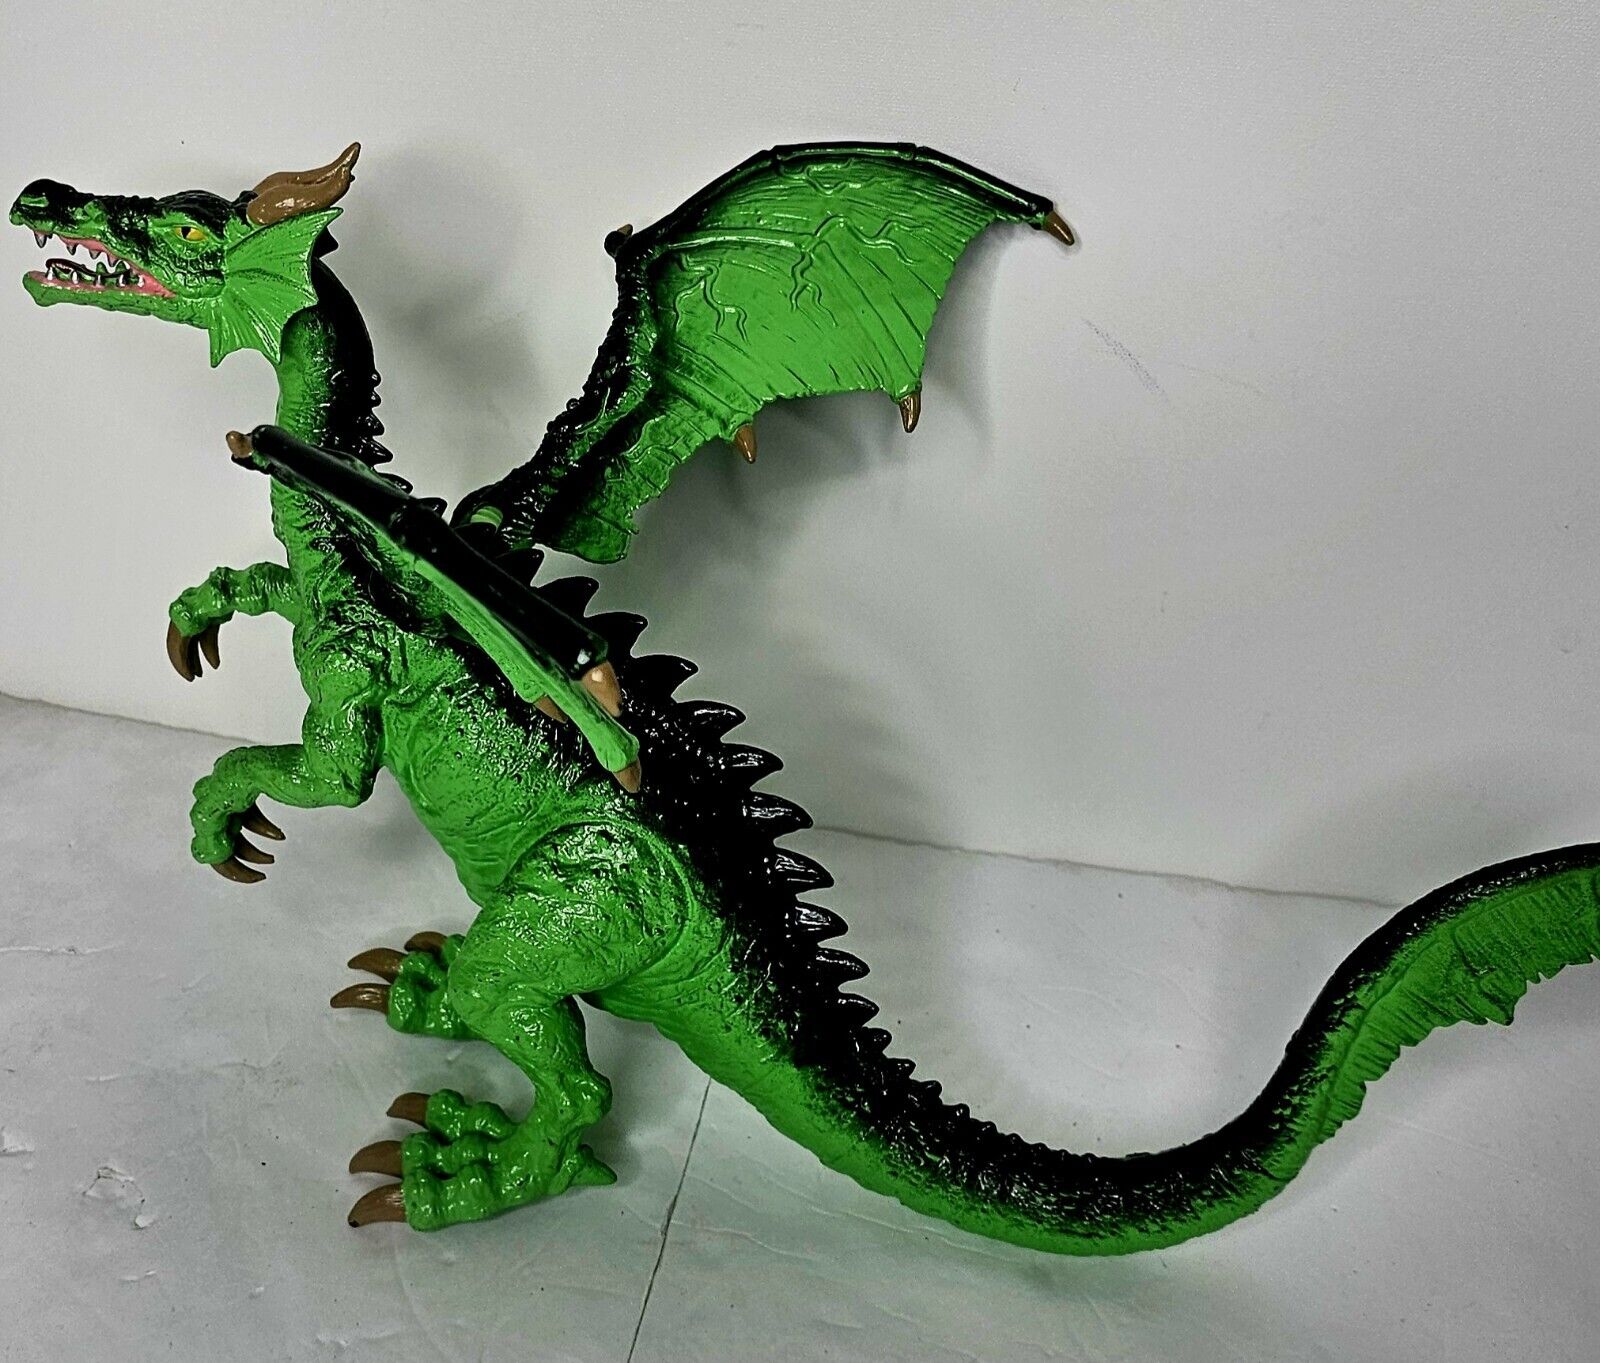 Medieval Fantasy Dragon Figure Schleich 2003 Fantasy Collectible Retired Model